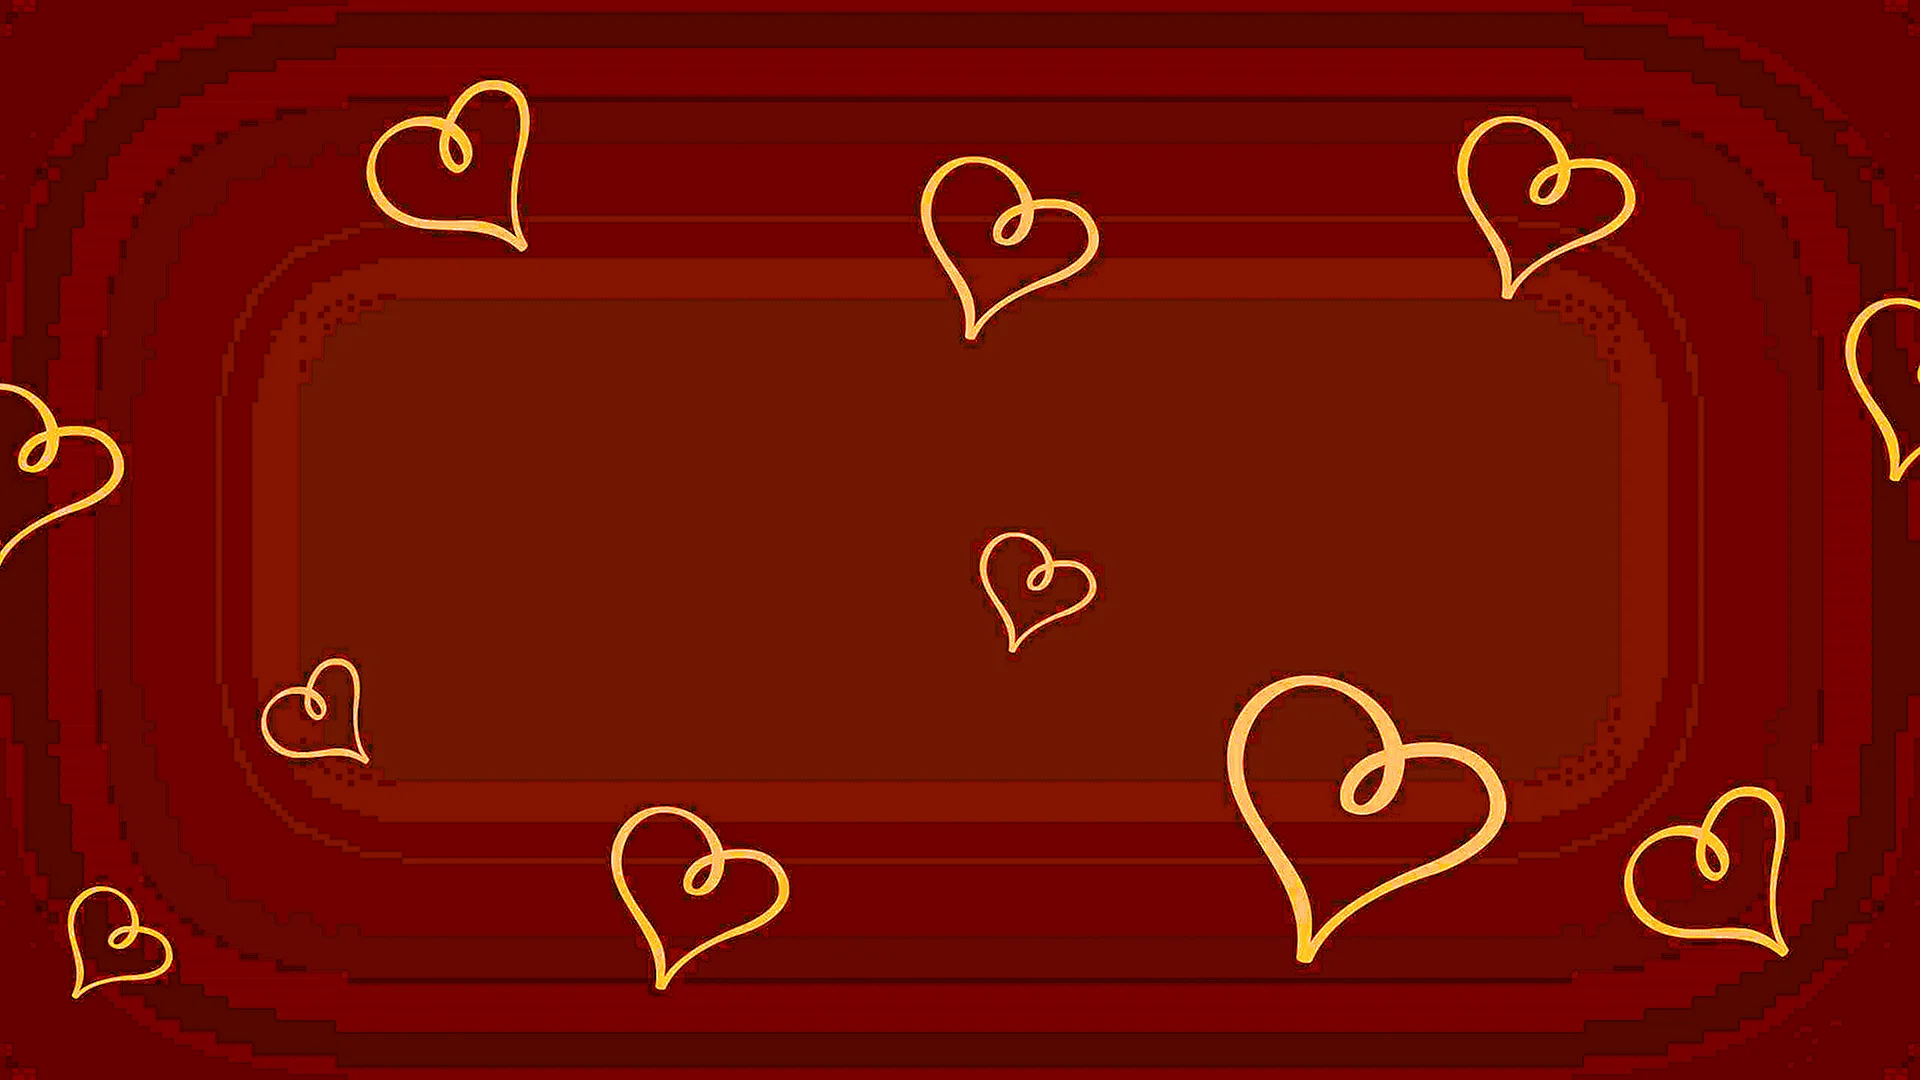 Aesthetic Brown Heart Wallpaper